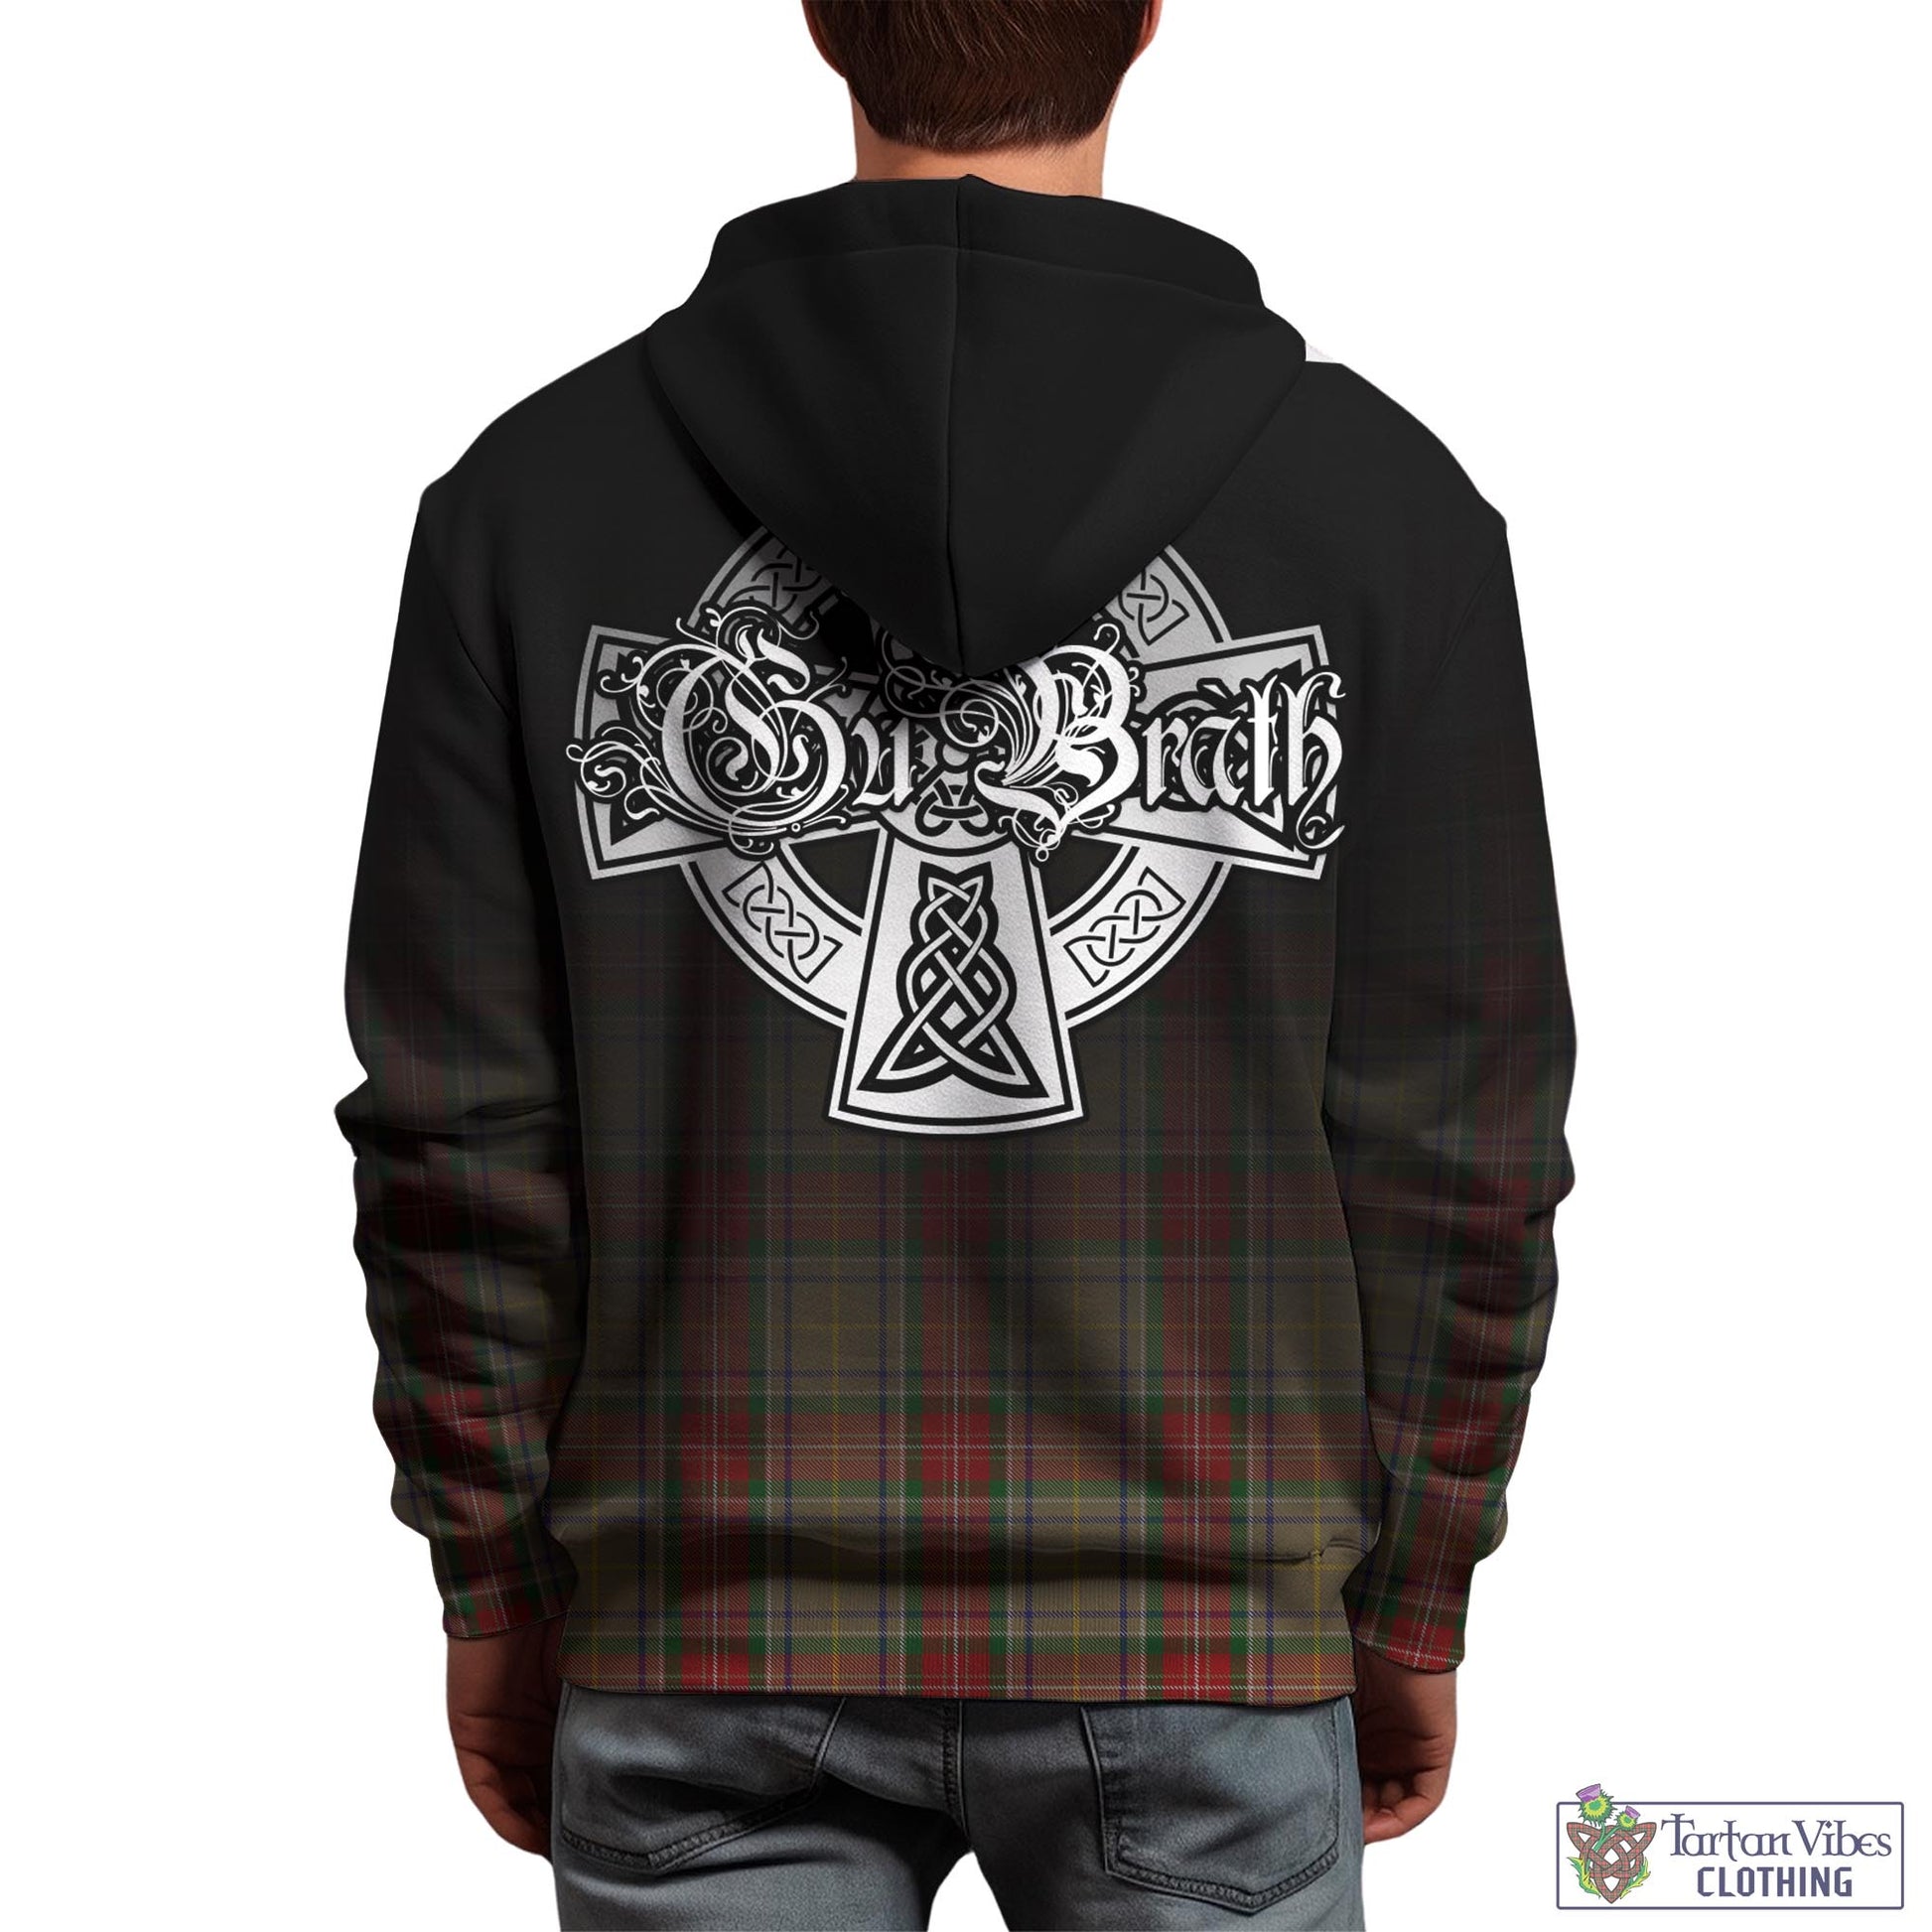 Tartan Vibes Clothing Muirhead Old Tartan Hoodie Featuring Alba Gu Brath Family Crest Celtic Inspired